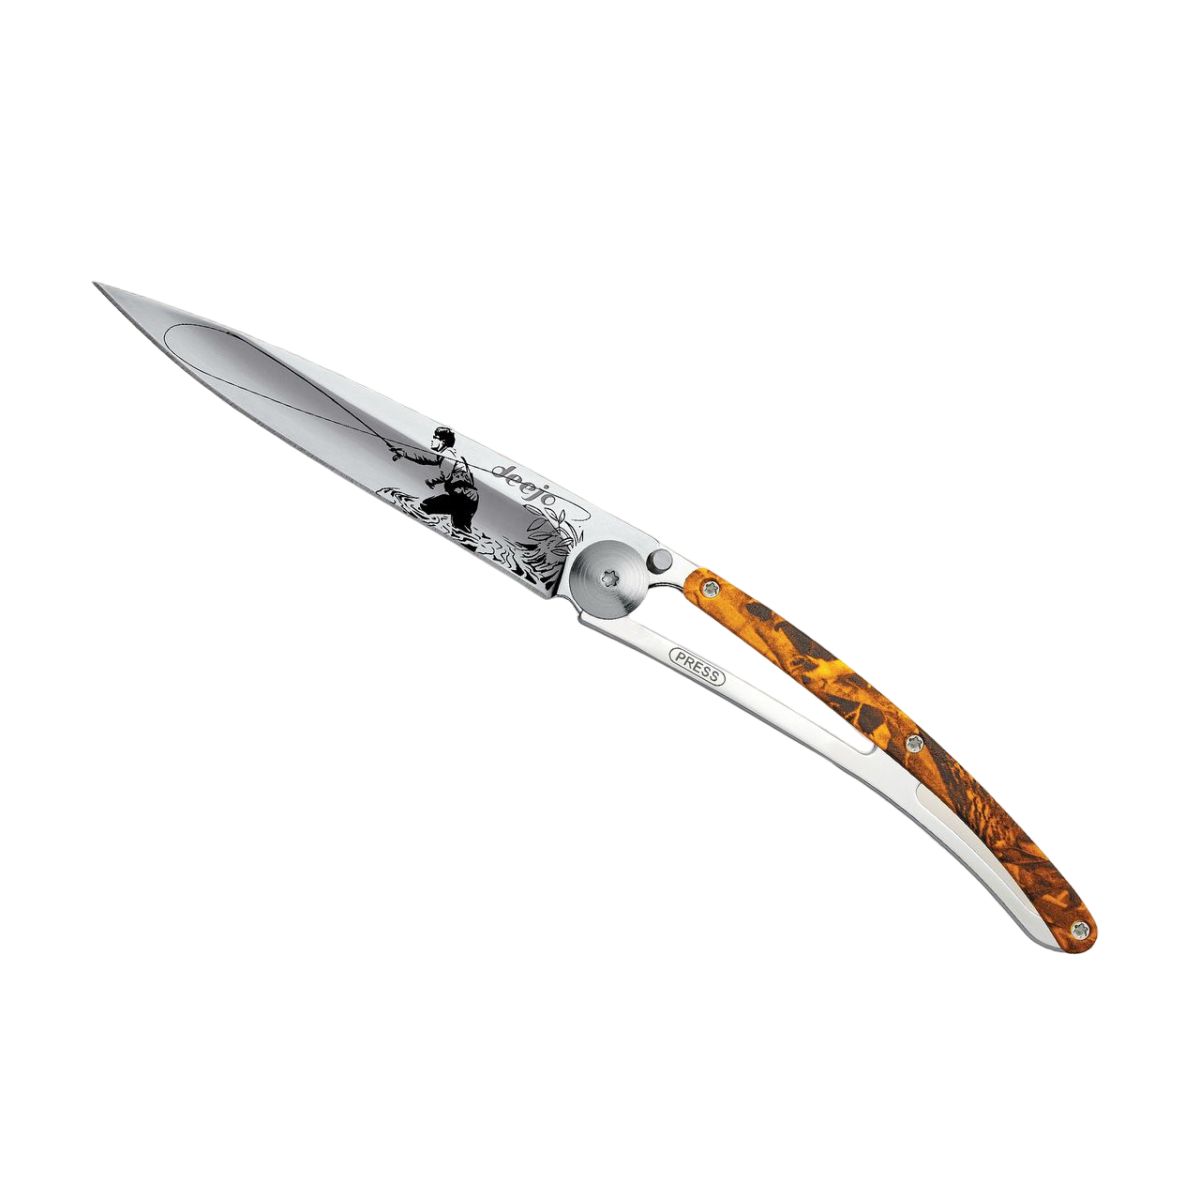 37g Camo Orange, Tattoo "Fly Fishing", Pocket Knife